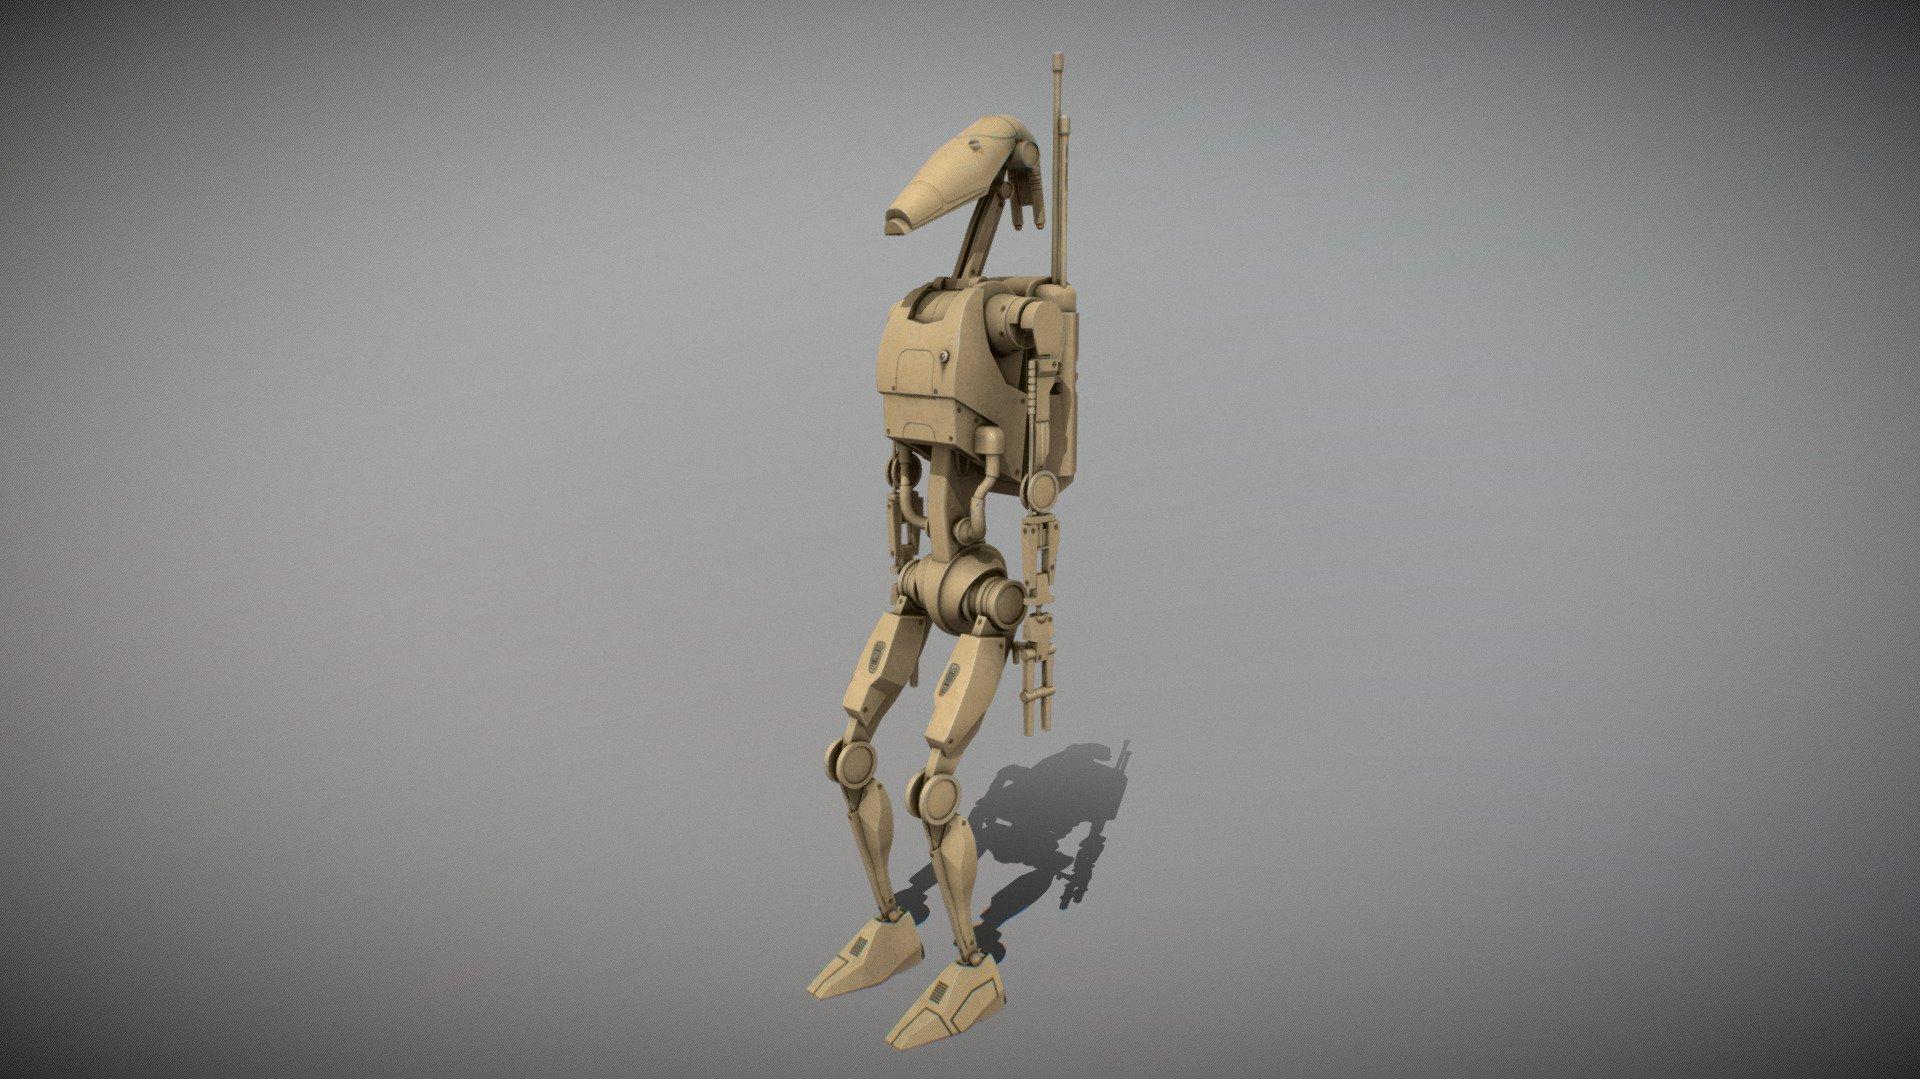 Star Wars B1 Battle Droid 3d Model By Eknightger